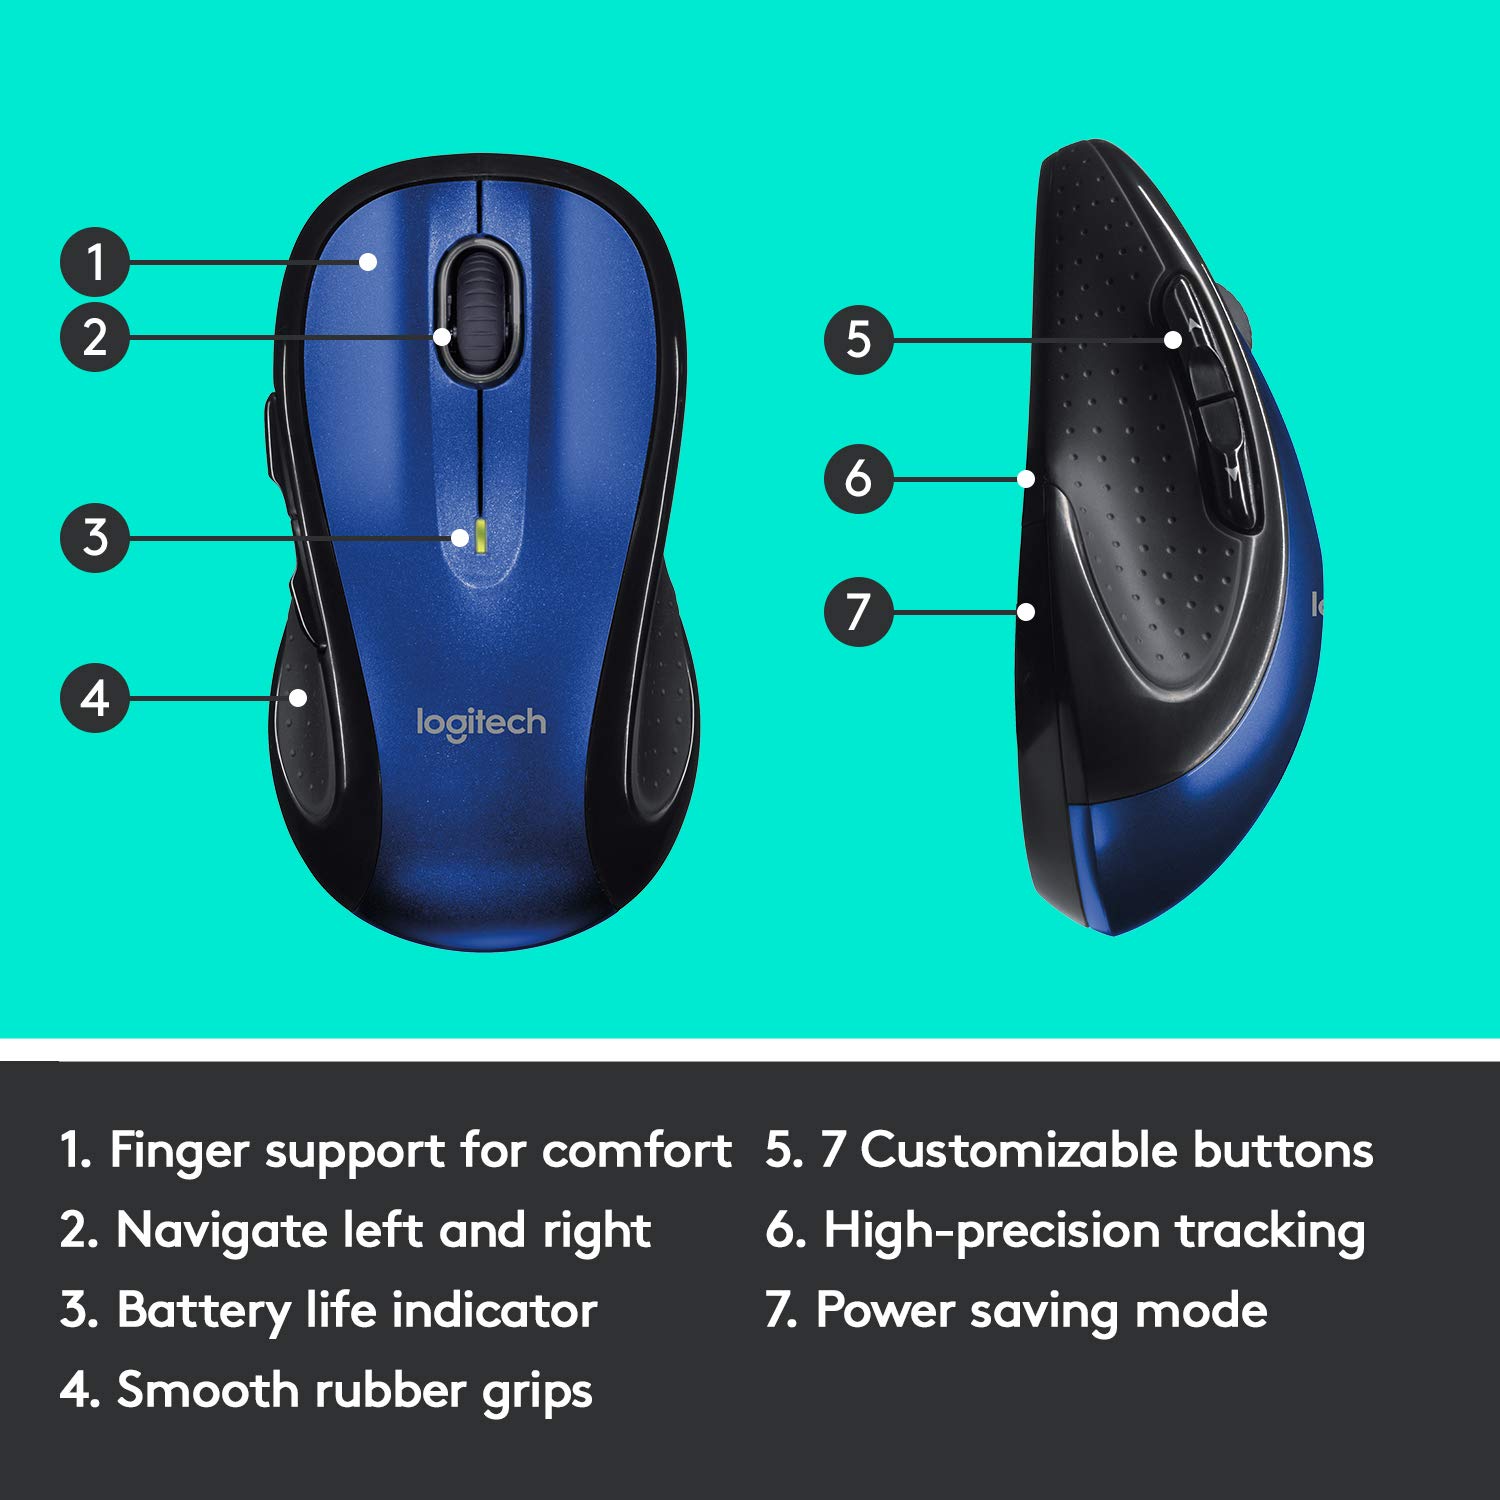 Logitech M510 Wireless Mouse, Blue (Renewed)